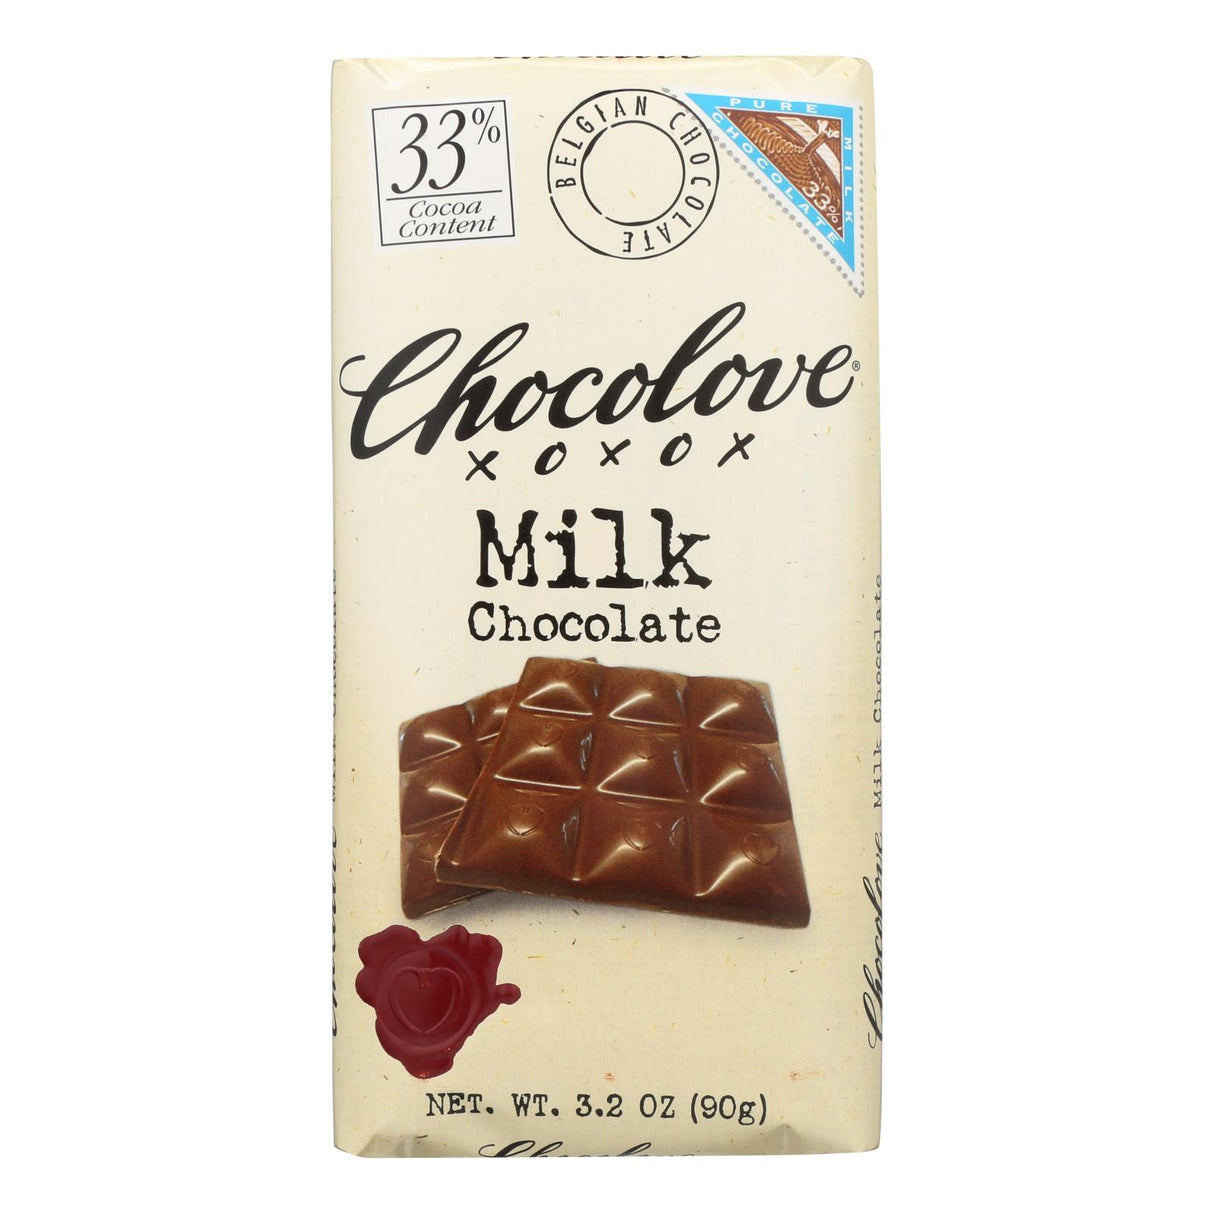 Delectable Chocolove Xoxox Milk Chocolate Bars | 12 x 3.2 Oz Bars - Cozy Farm 